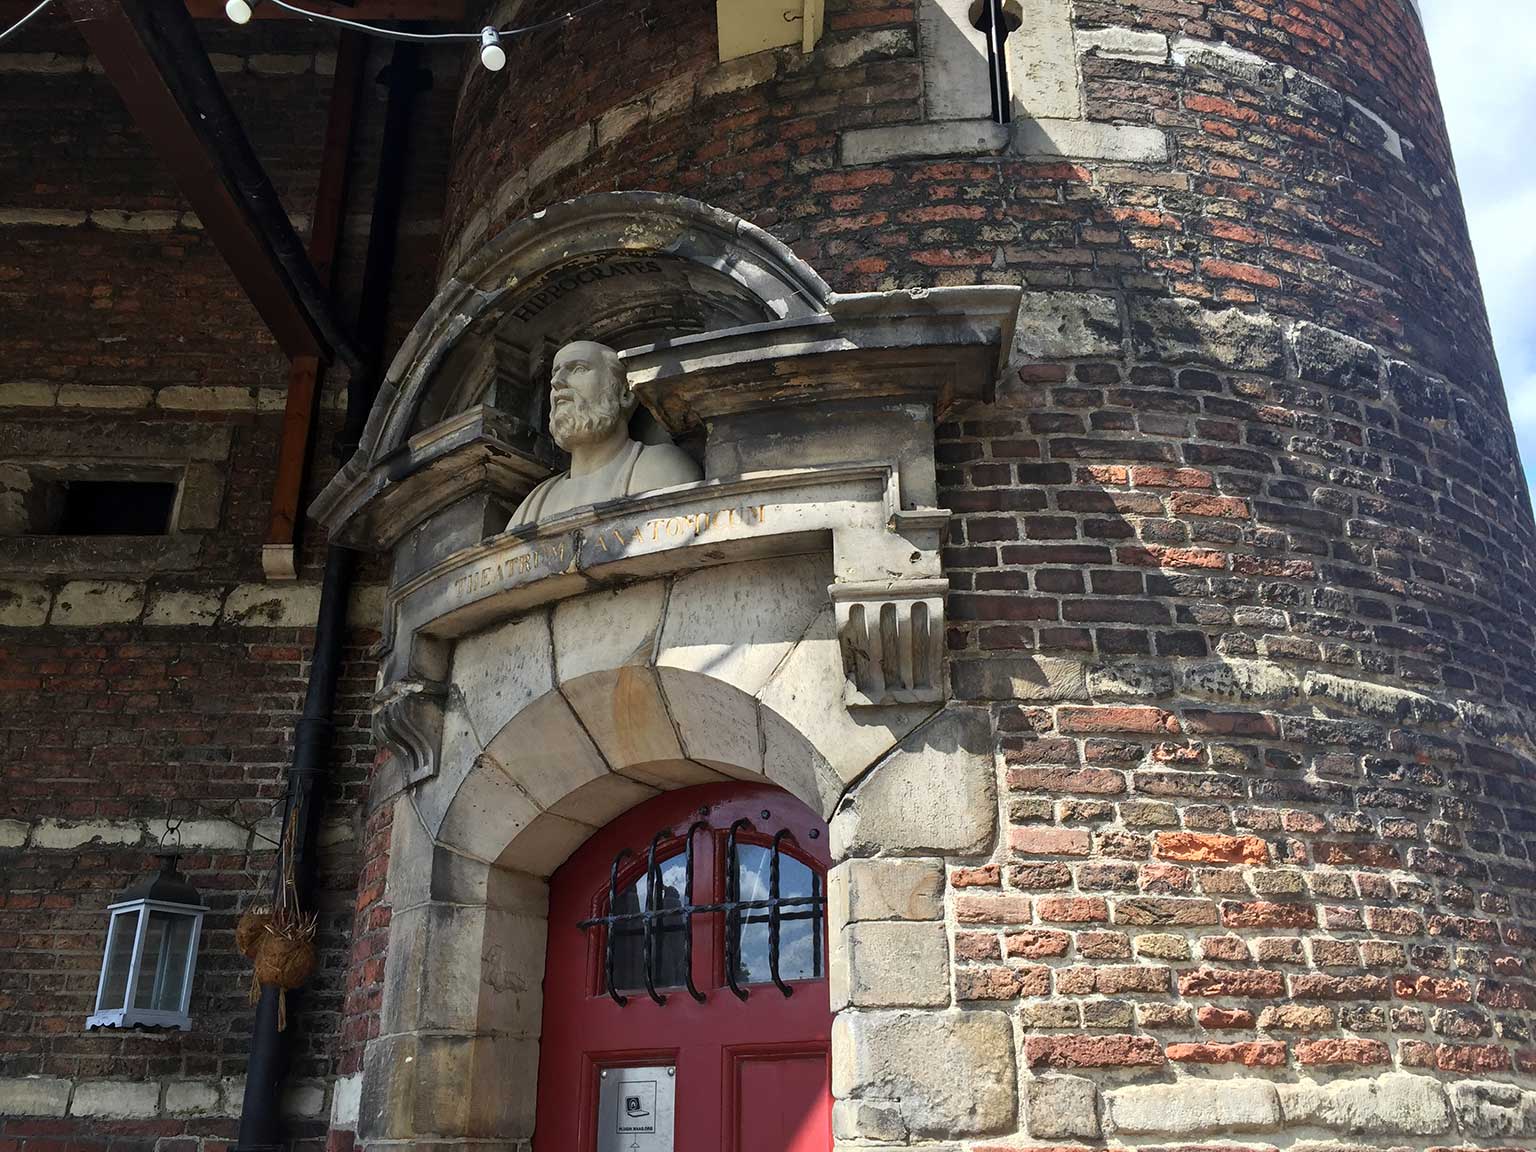 Entrance of the Theatrum Anatomicum tower in the Waag, Nieuwmarkt, Amsterdam